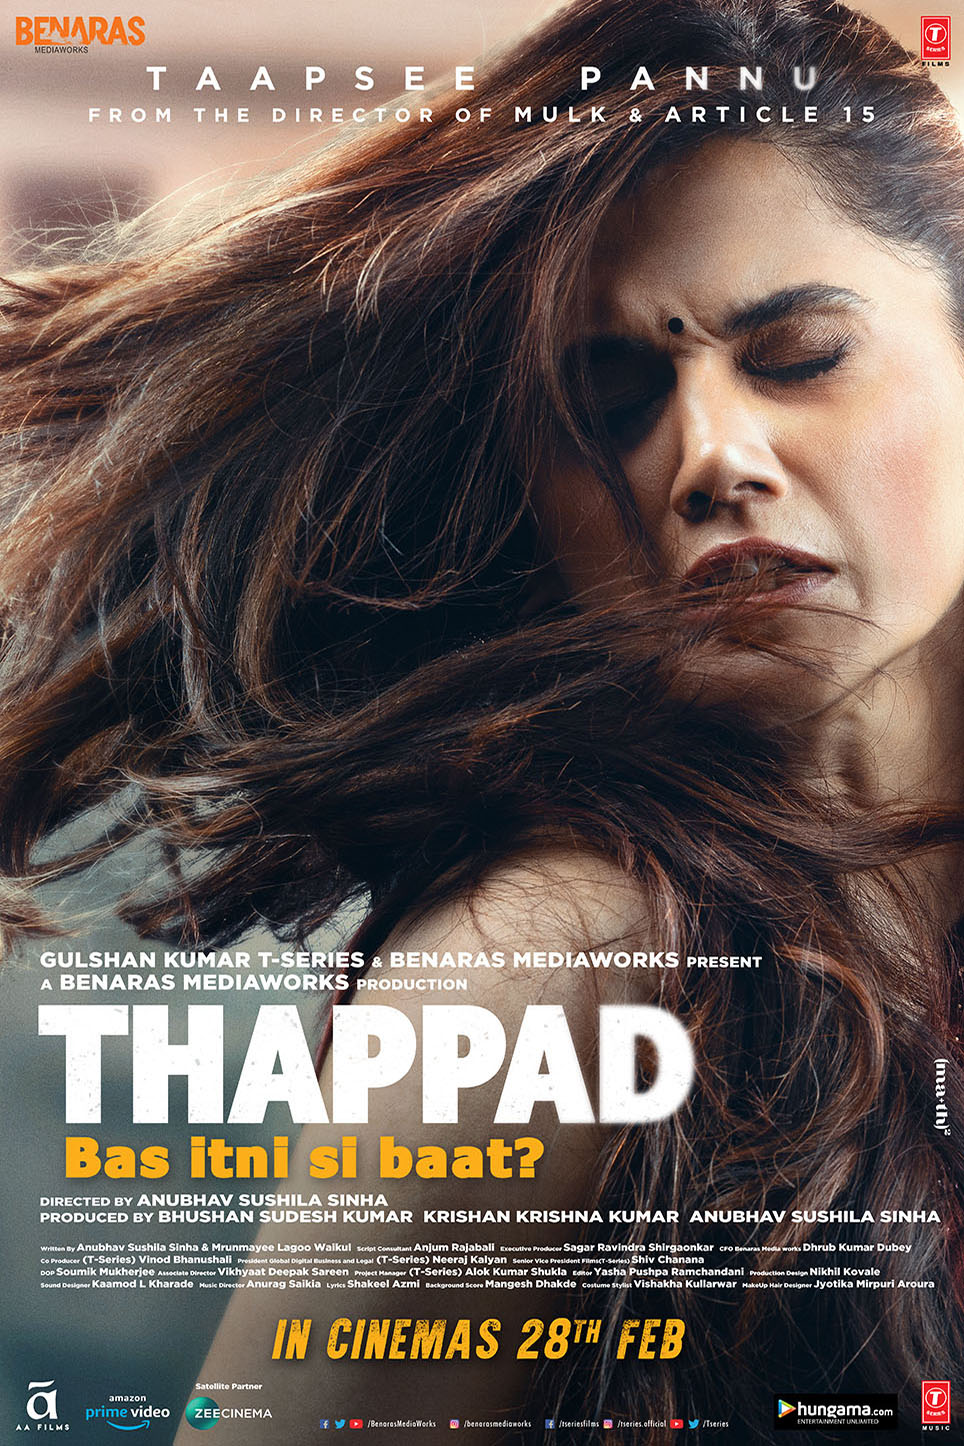 Thappad Women centric movies